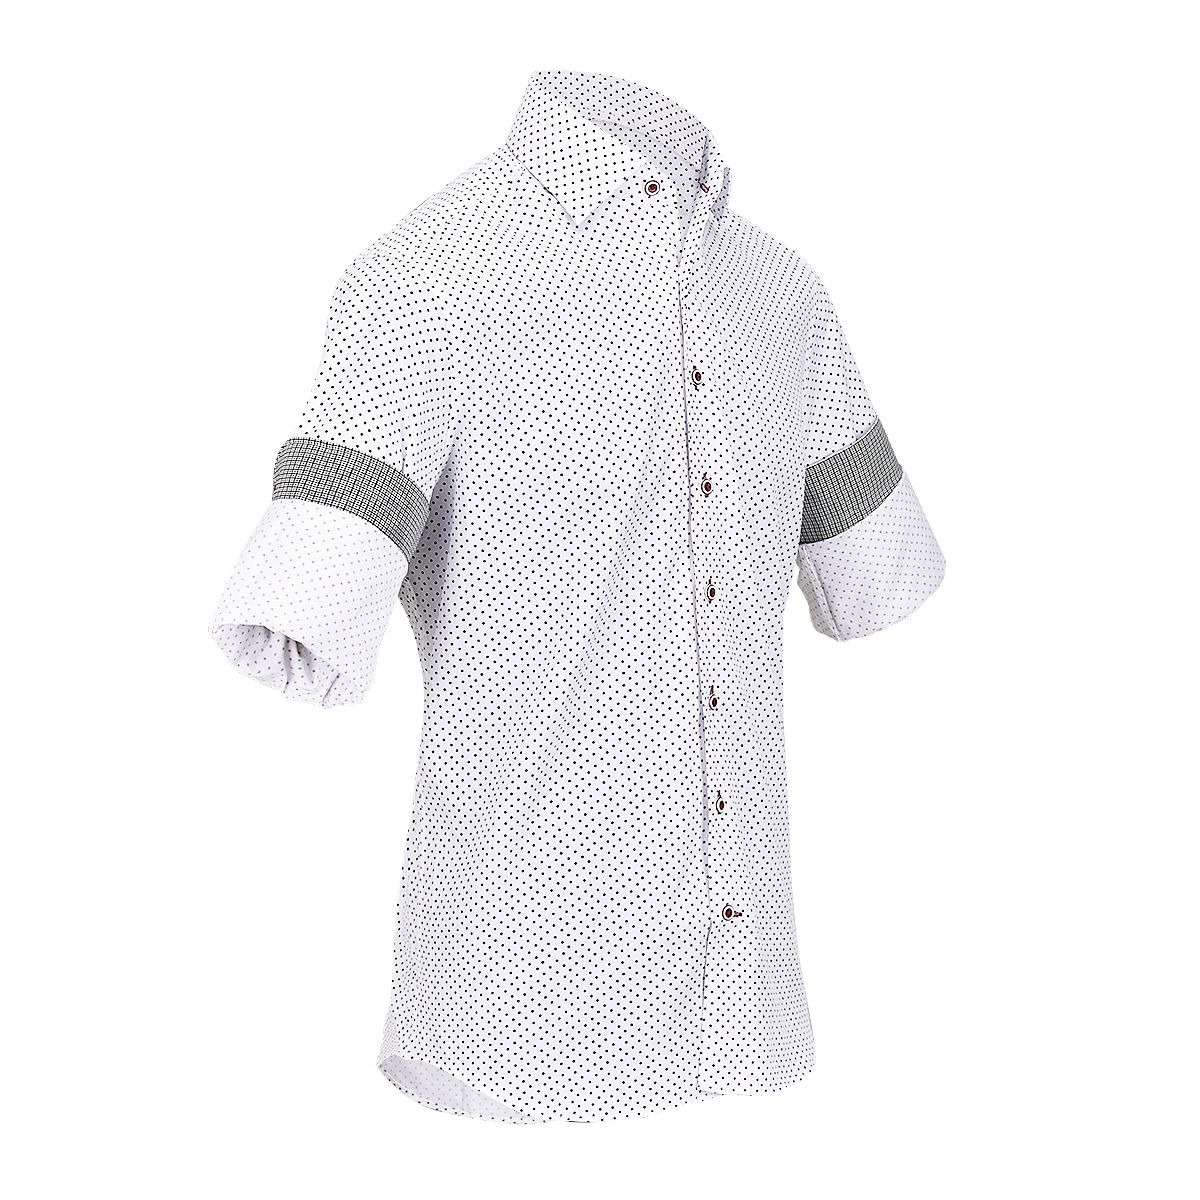 CMW481R - Cuadra white fashion casual cotton fine medallion shirt for men-Kuet.us